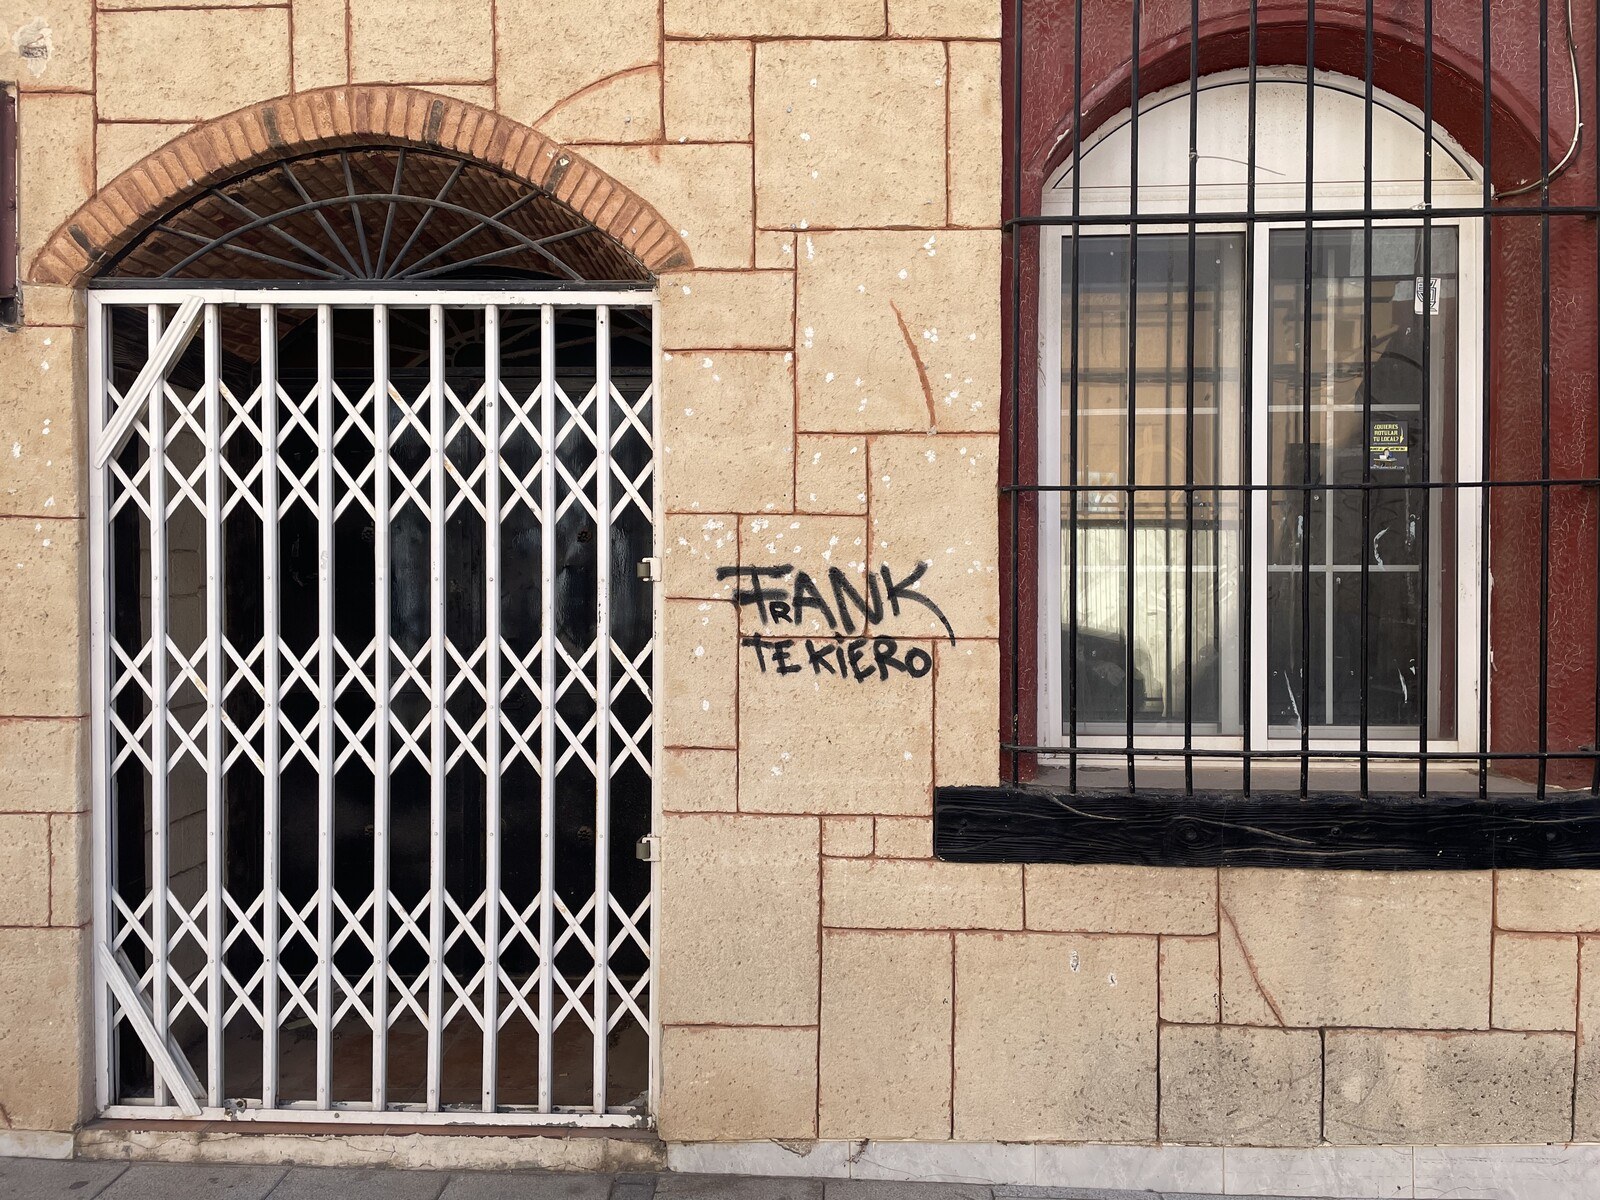 A graffiti on the side of a stone building reading "Frank te kiero"